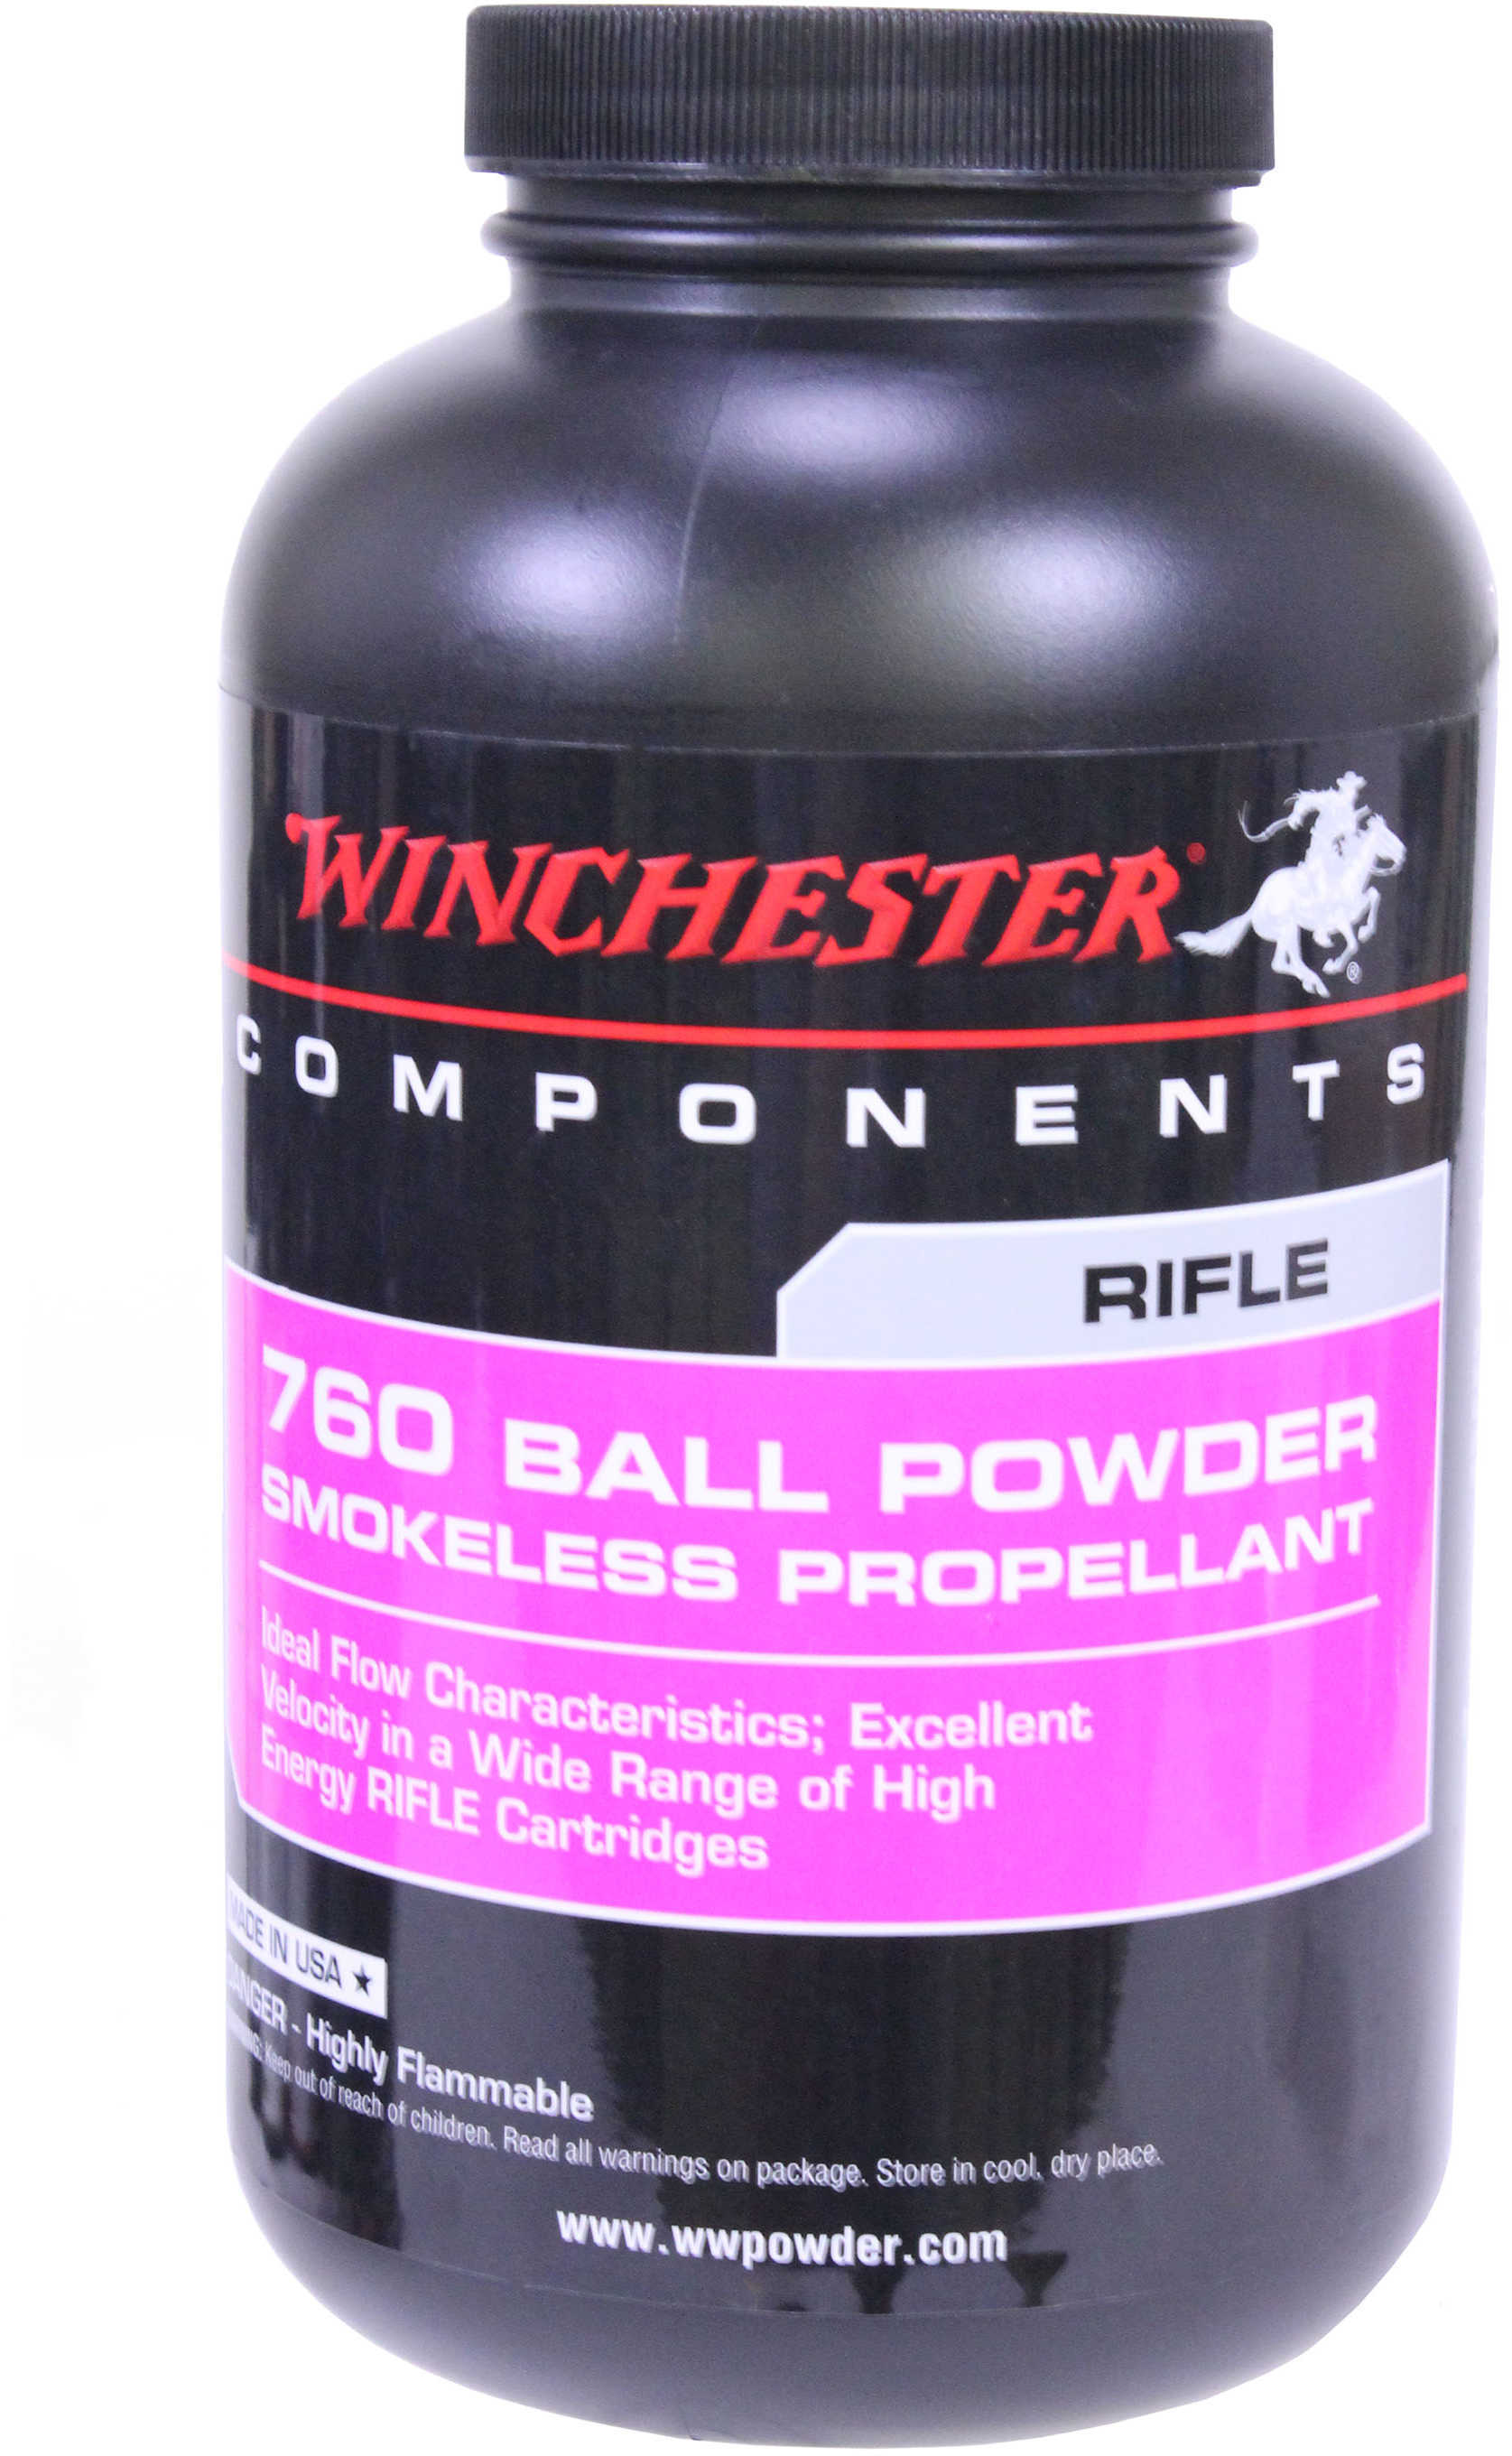 Winchester 760 Smokeless Powder 1 Lb